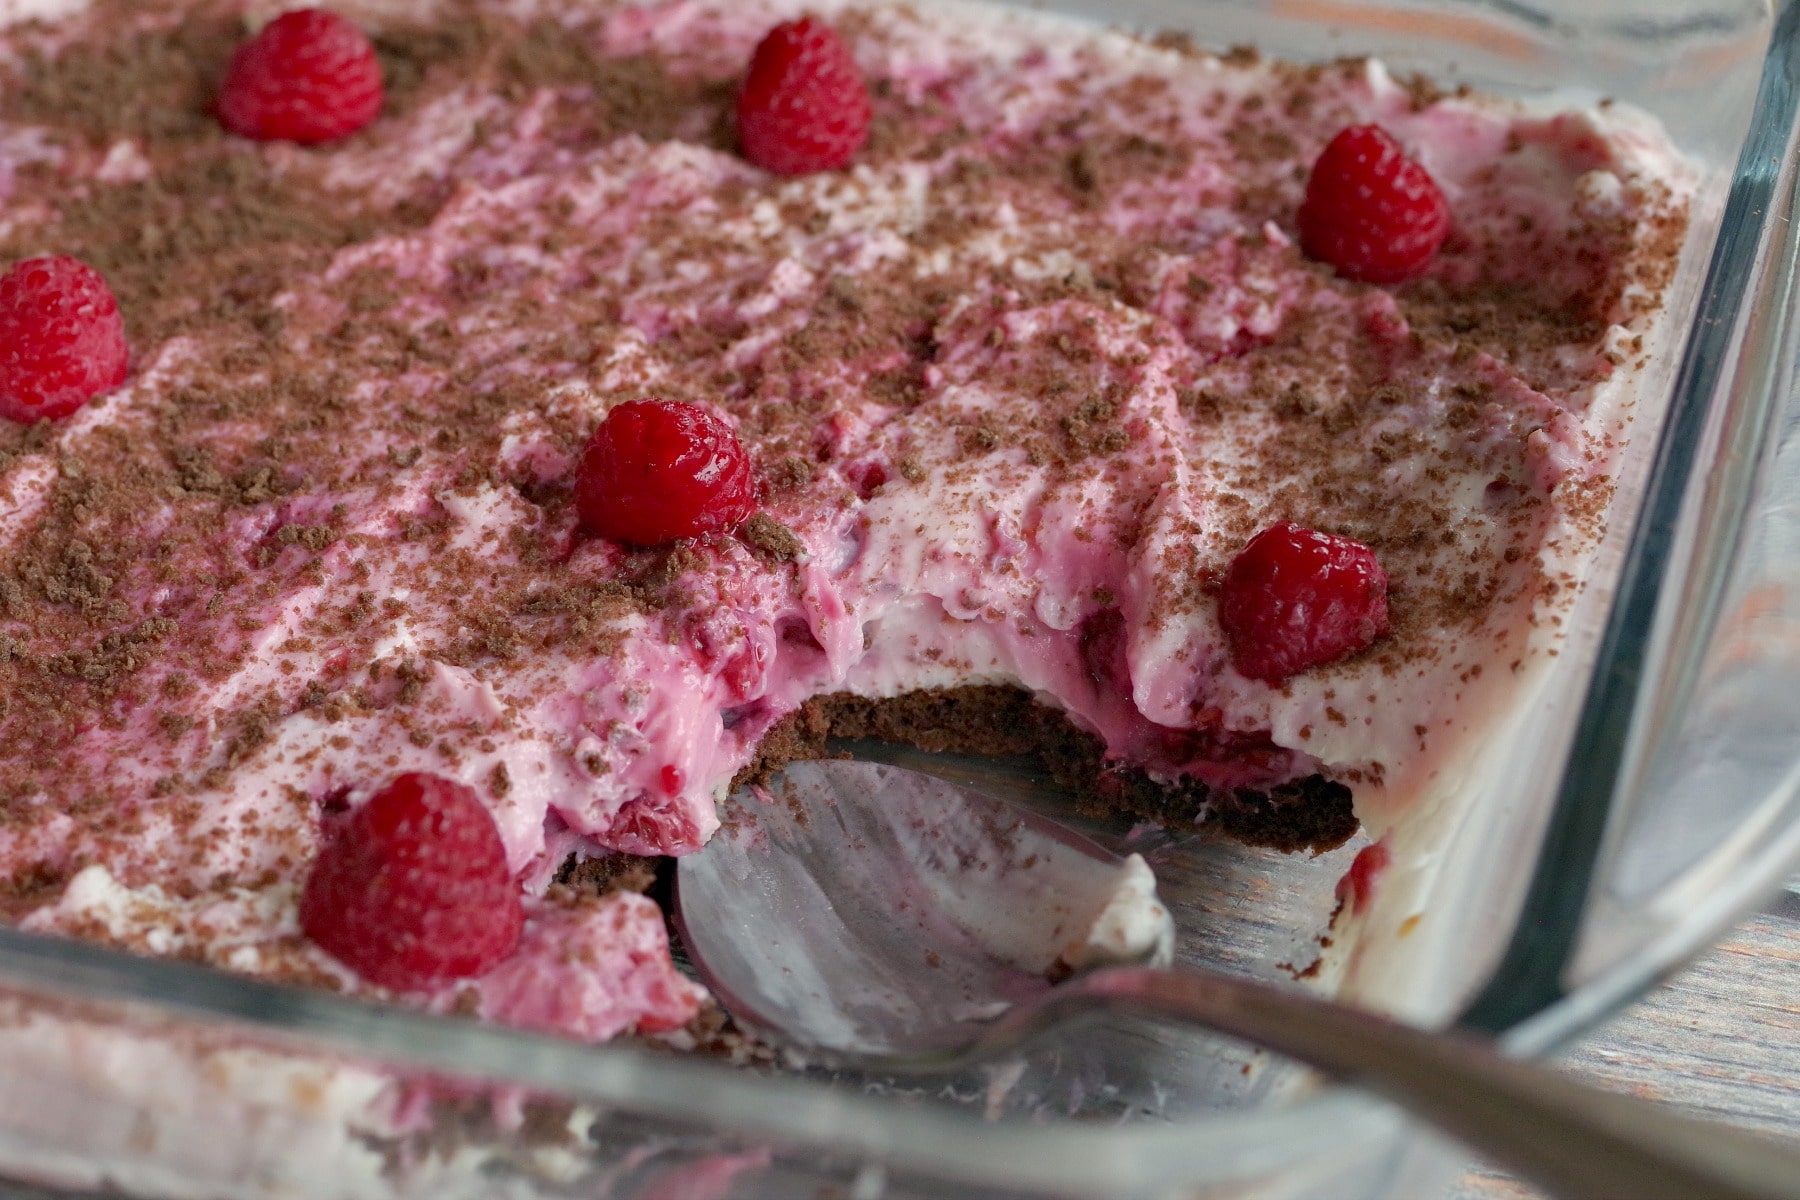 weight watchers white chocolate raspberry cheesecake dessert in glass dish with spoon